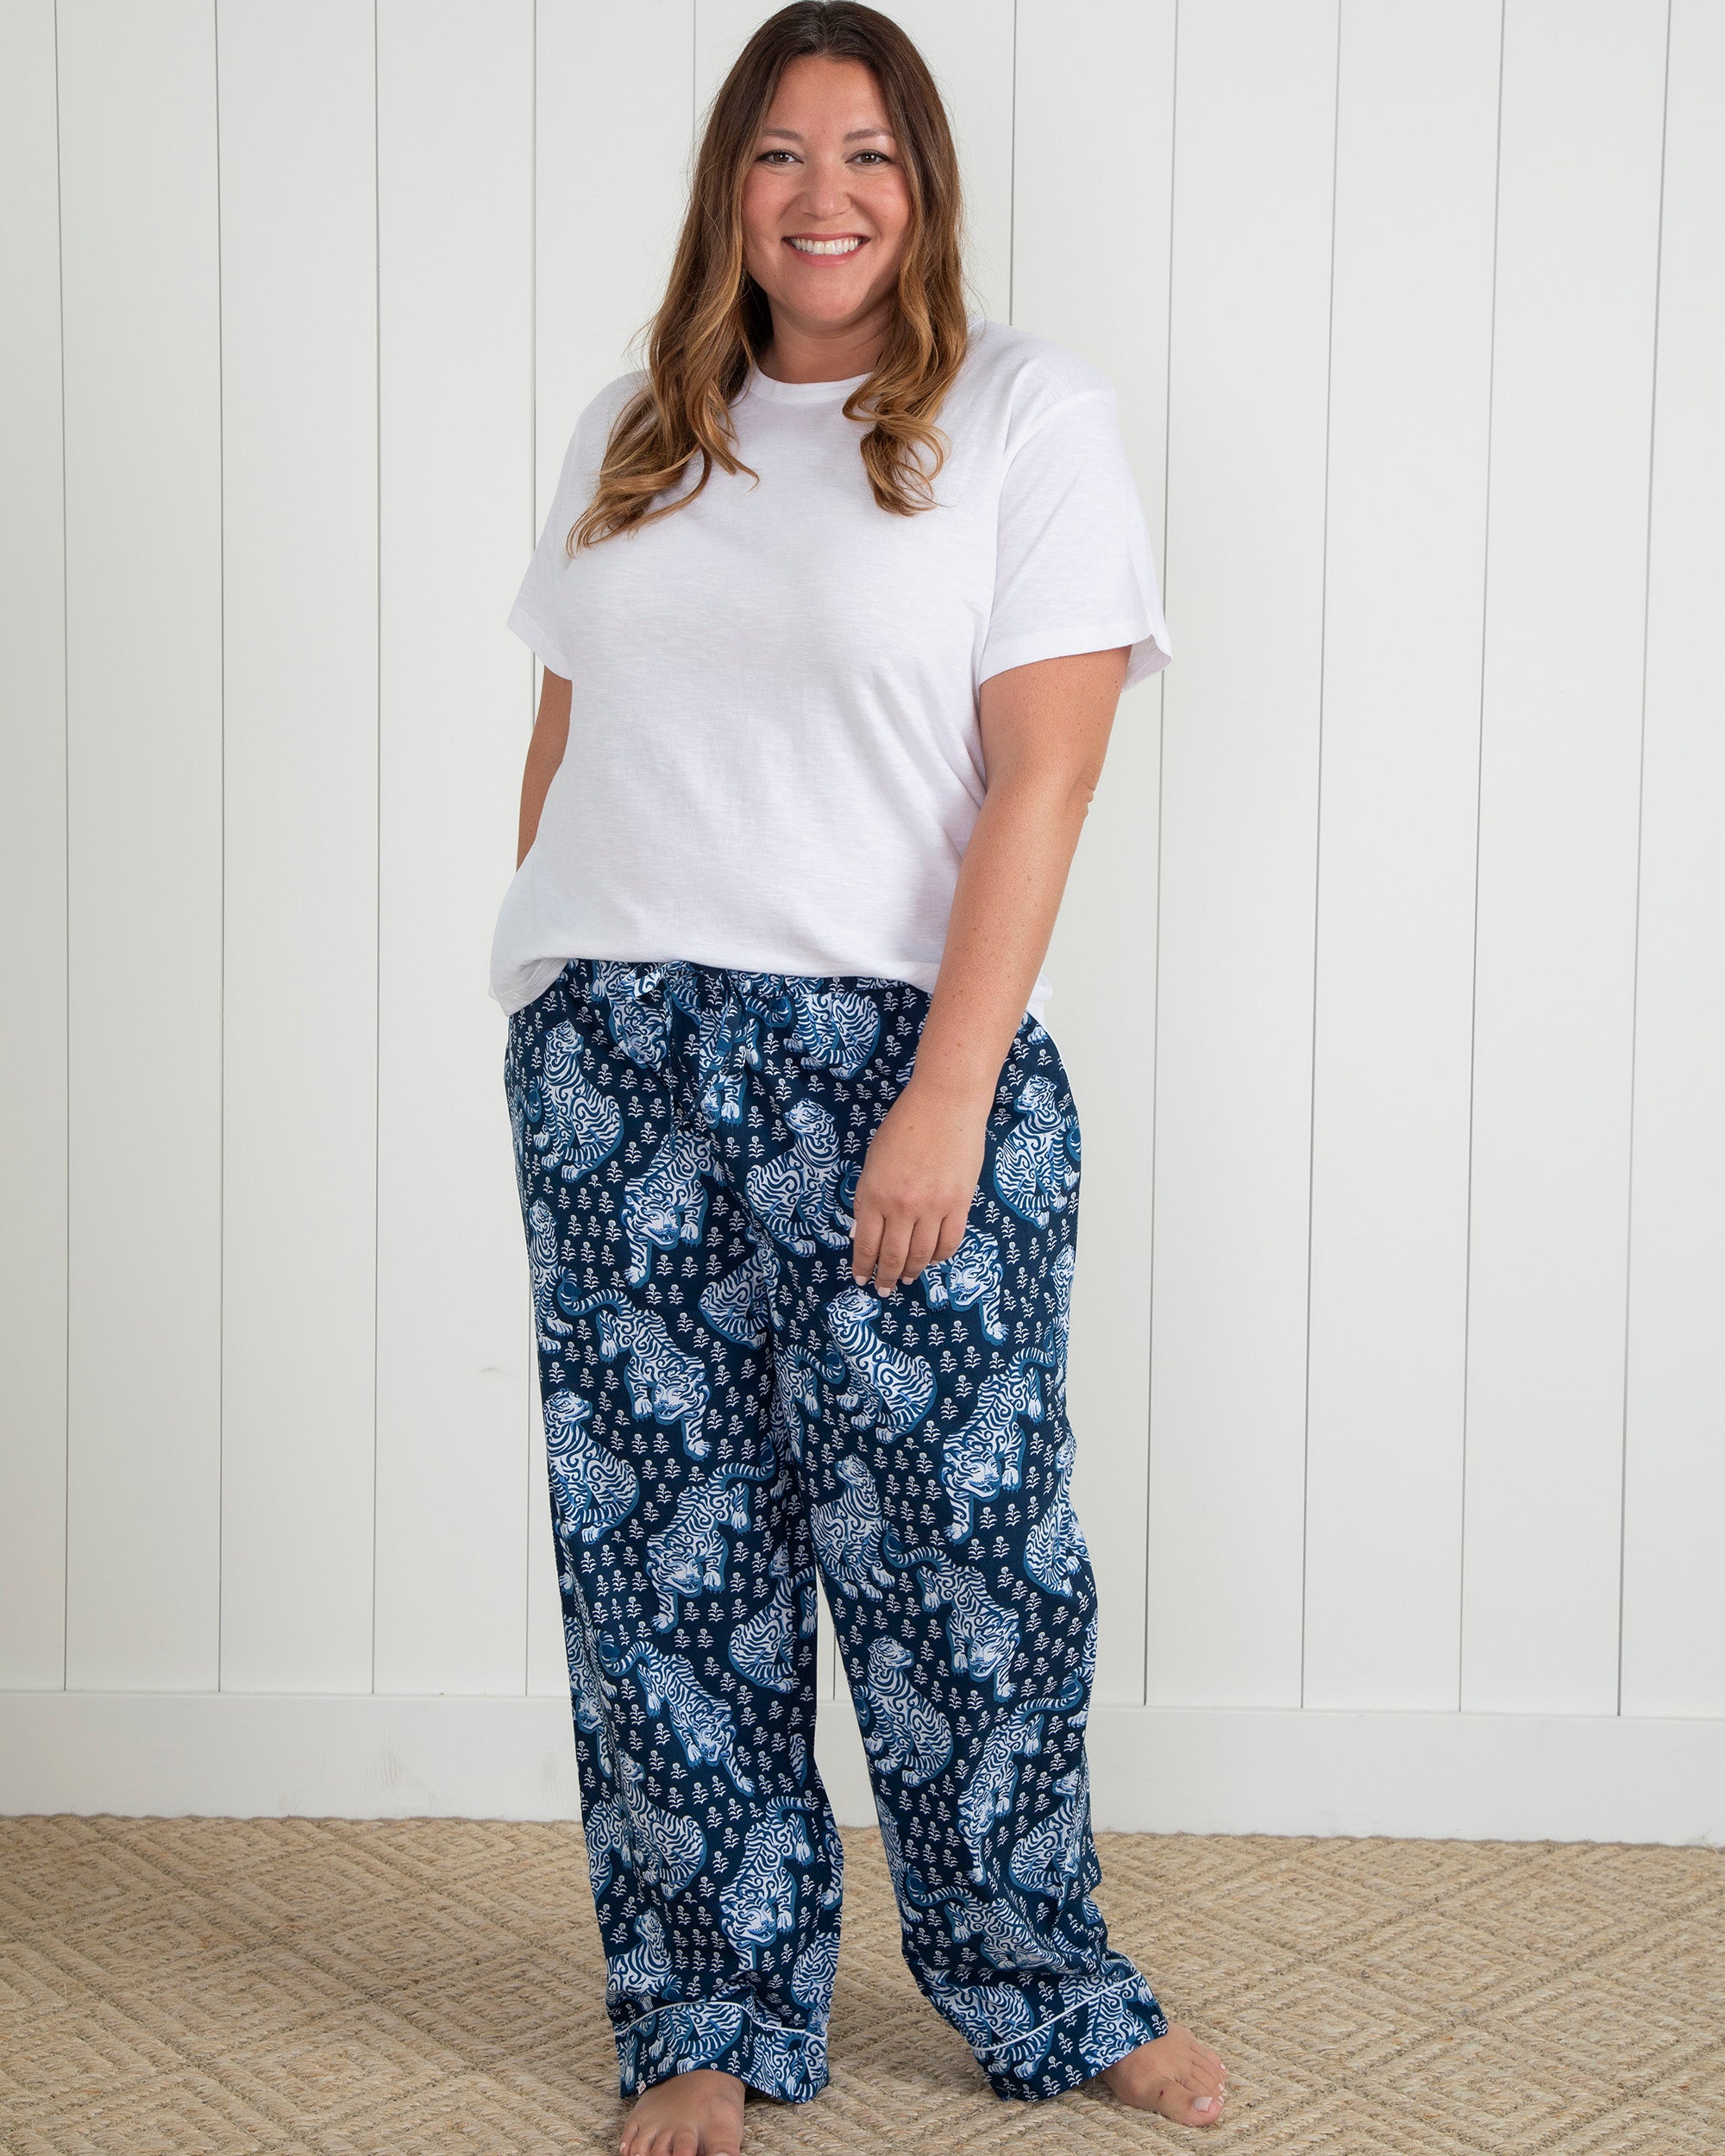 Tiger Queen - Women's Organic Cotton Tall Pajama Pants - Navy